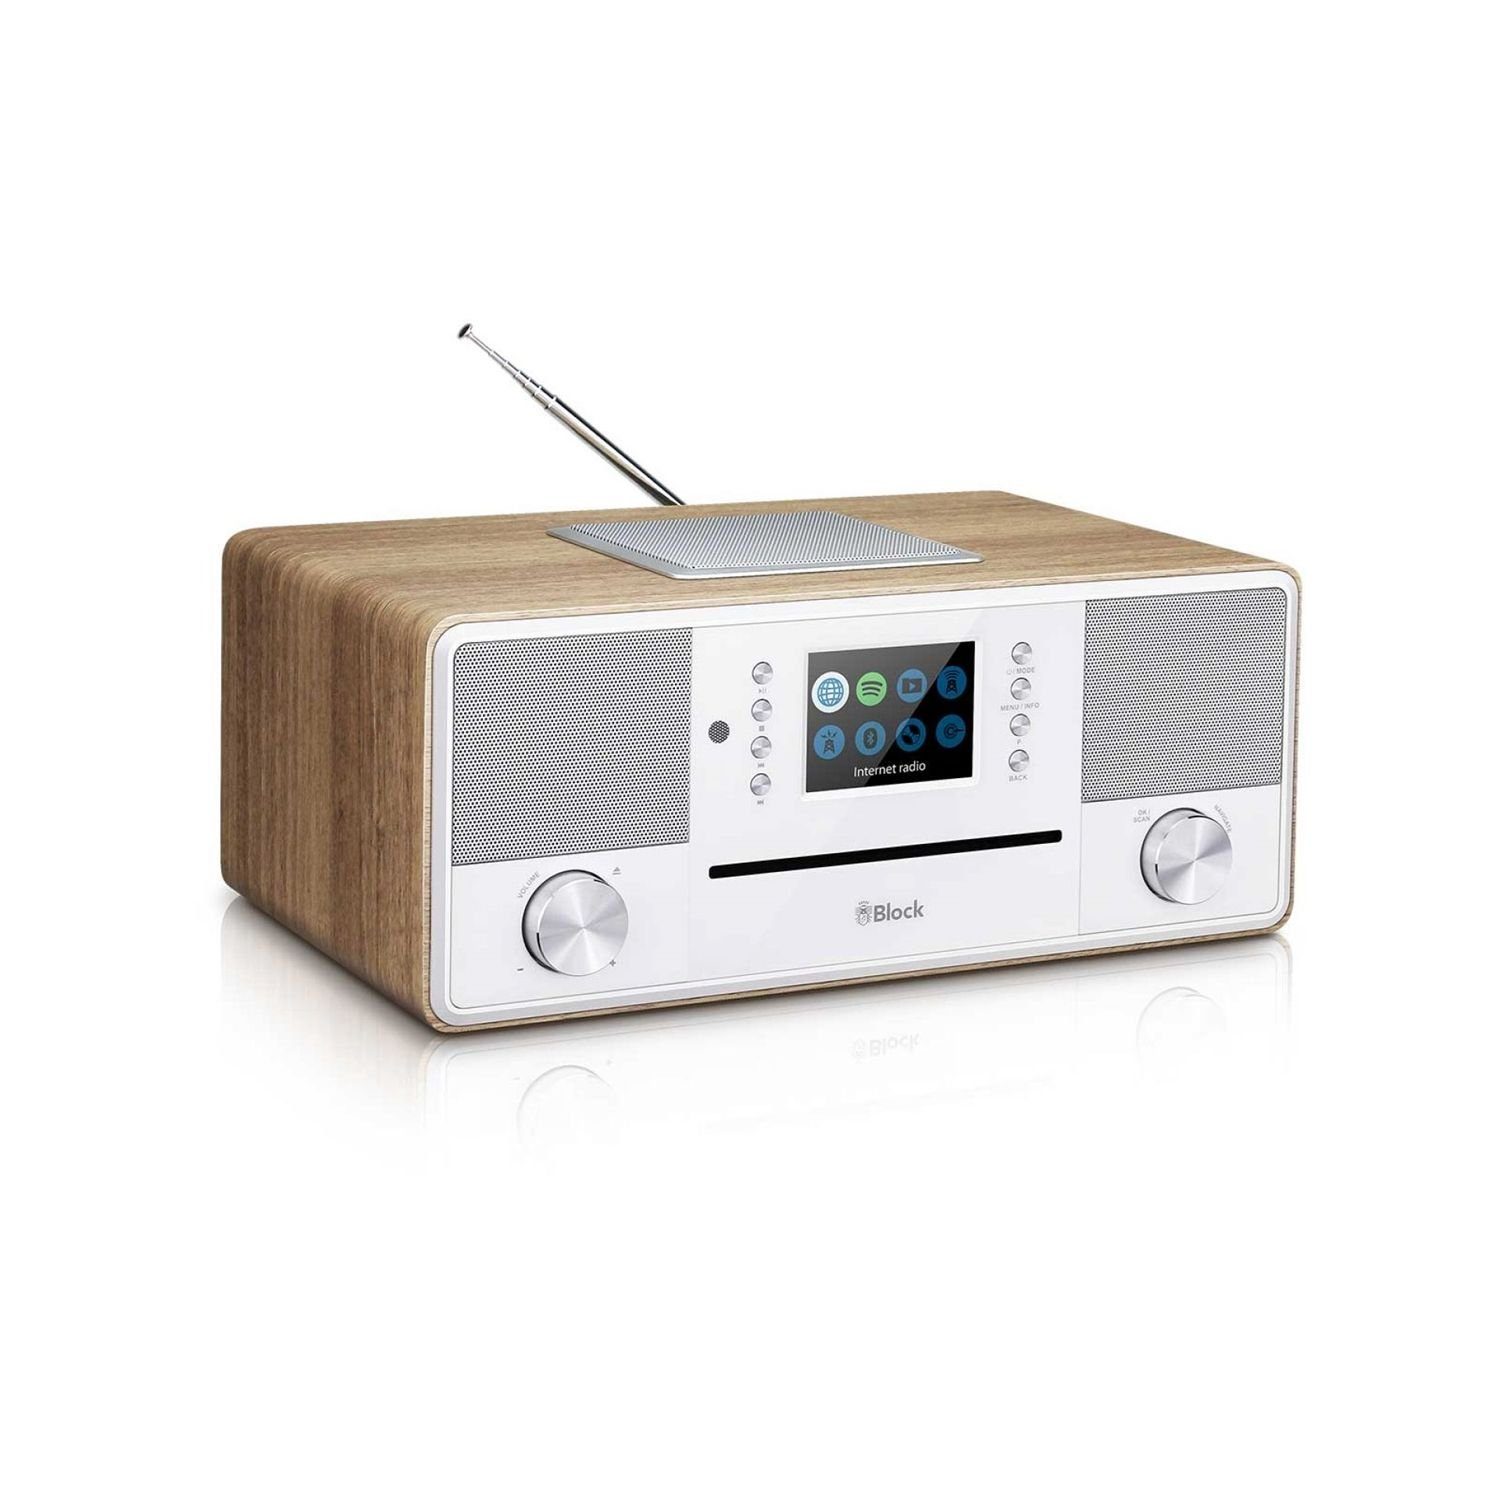 Spotify walnuss/silber Digitalradio SR-50 CD (DAB) USB UKW/DAB+/Internetradio Smartradio Bluetooth Block